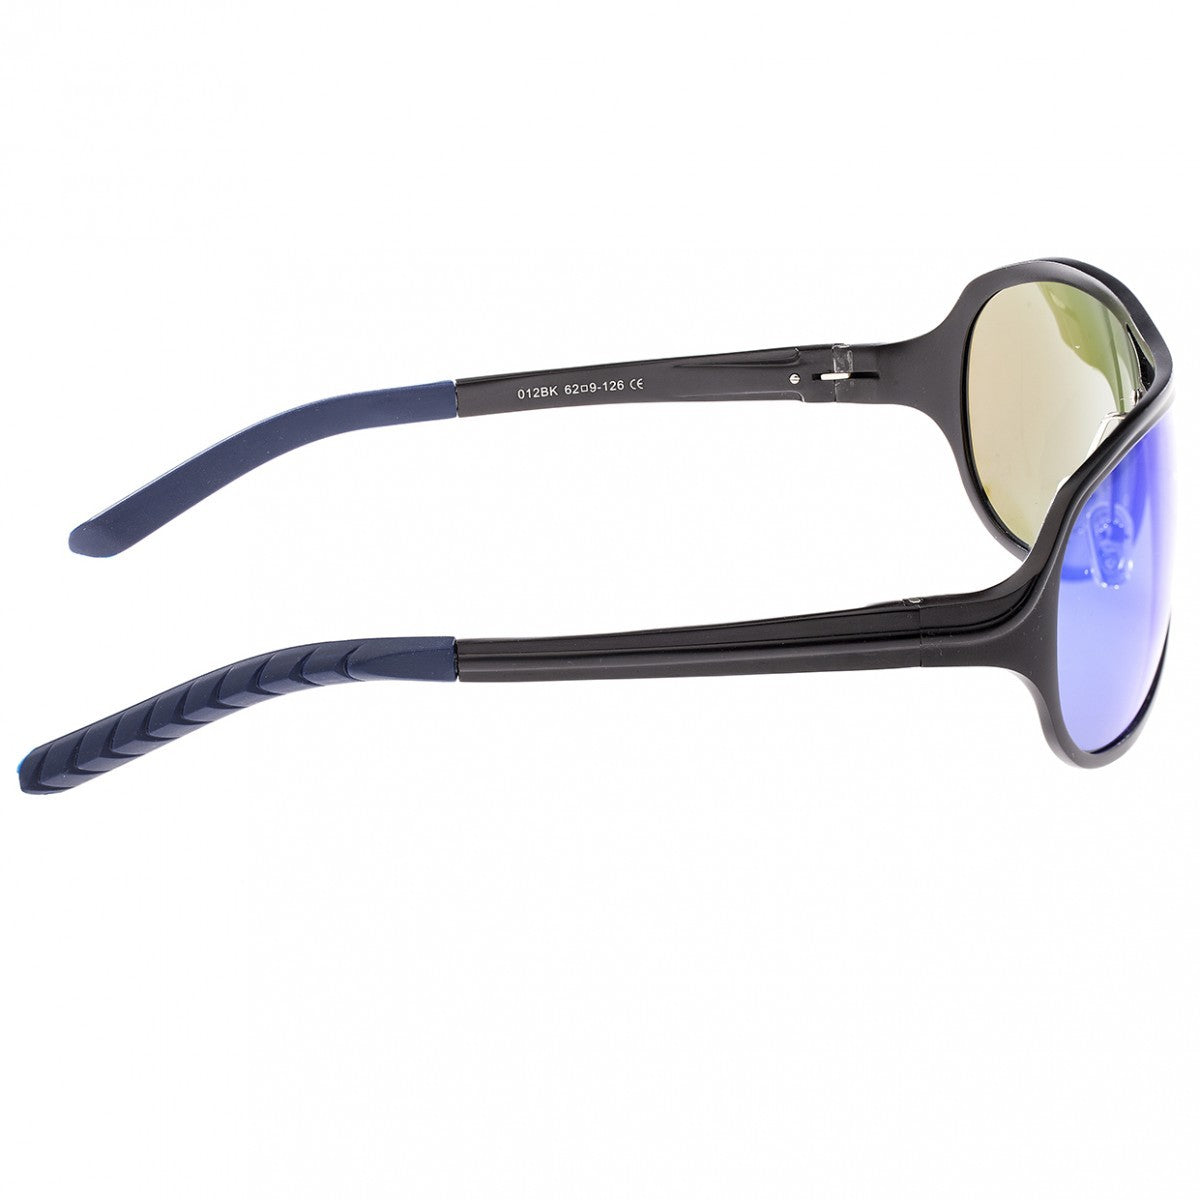 Breed Langston Aluminium Polarized Sunglasses - Black/Blue - BSG012BK